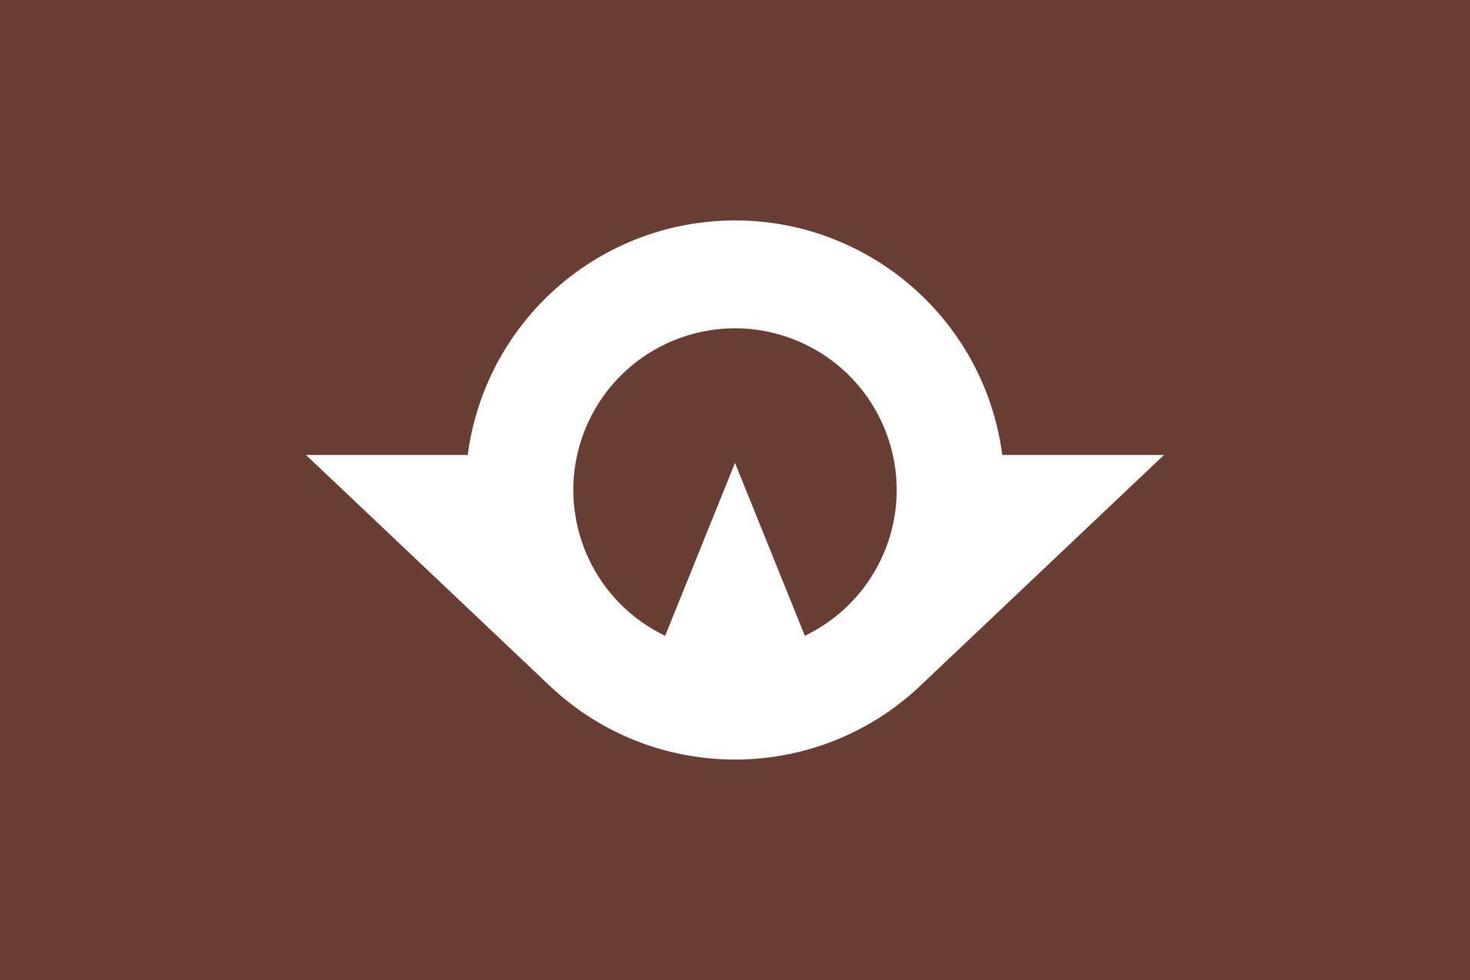 yamaguchi vlag, Japan prefectuur. vector illustratie